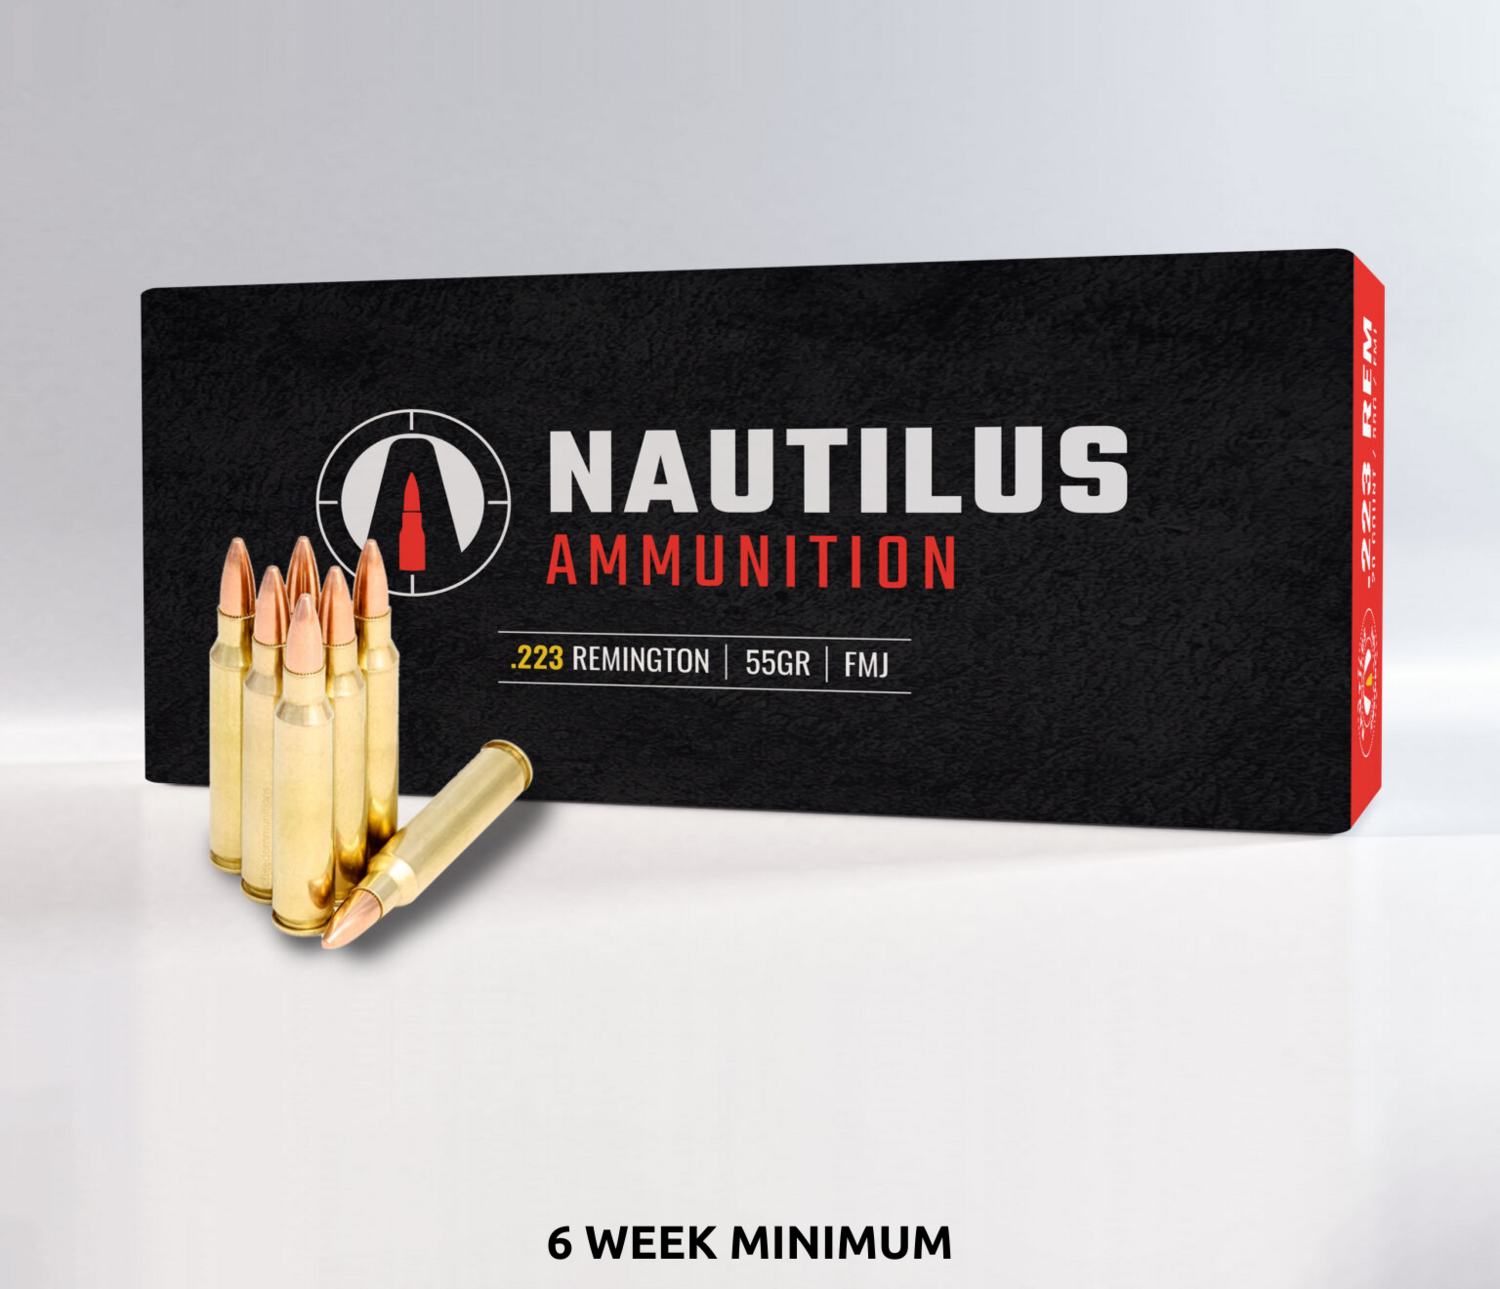 Nautilus .223 Remington - 20 - 1000 ROUNDS
$14.99 – $720.00